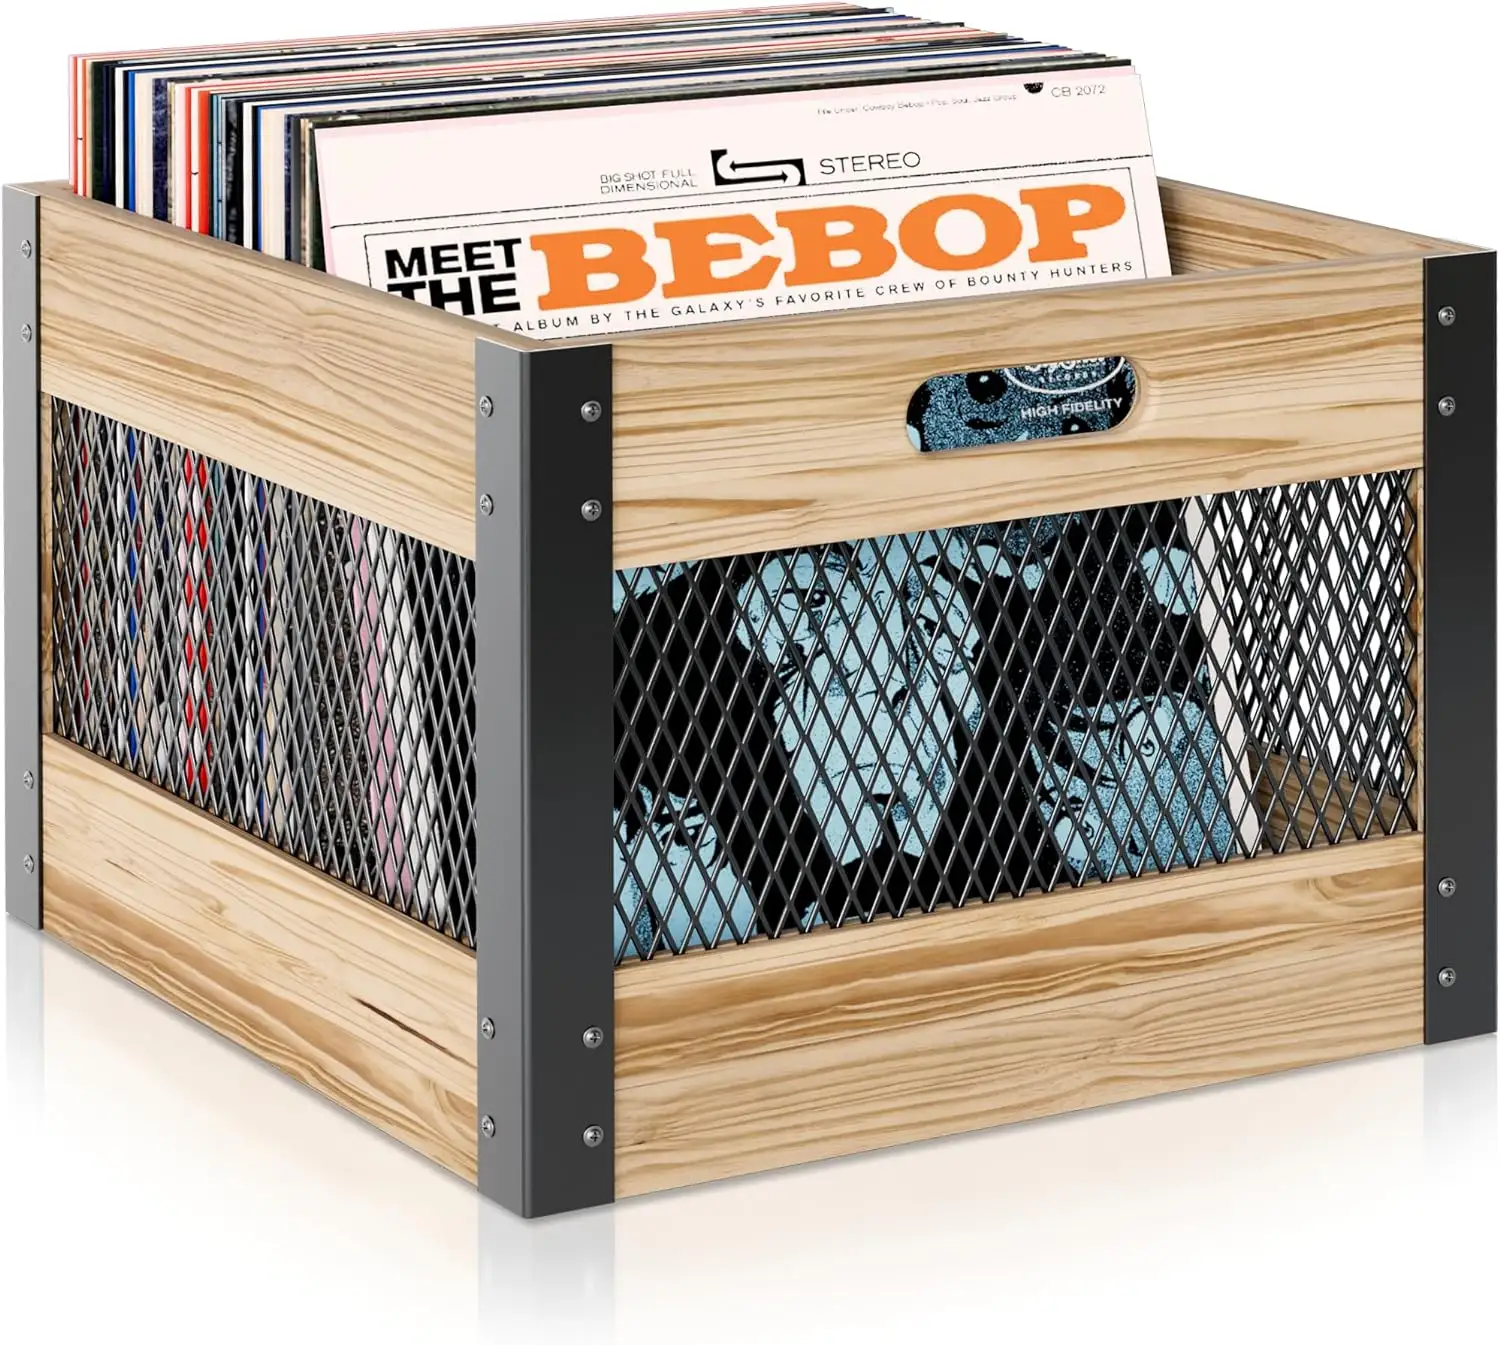 Vinyl Record Storage Crate with Heavy Duty Metal Edge Support Bracket,Wooden Record Album Storage Holder